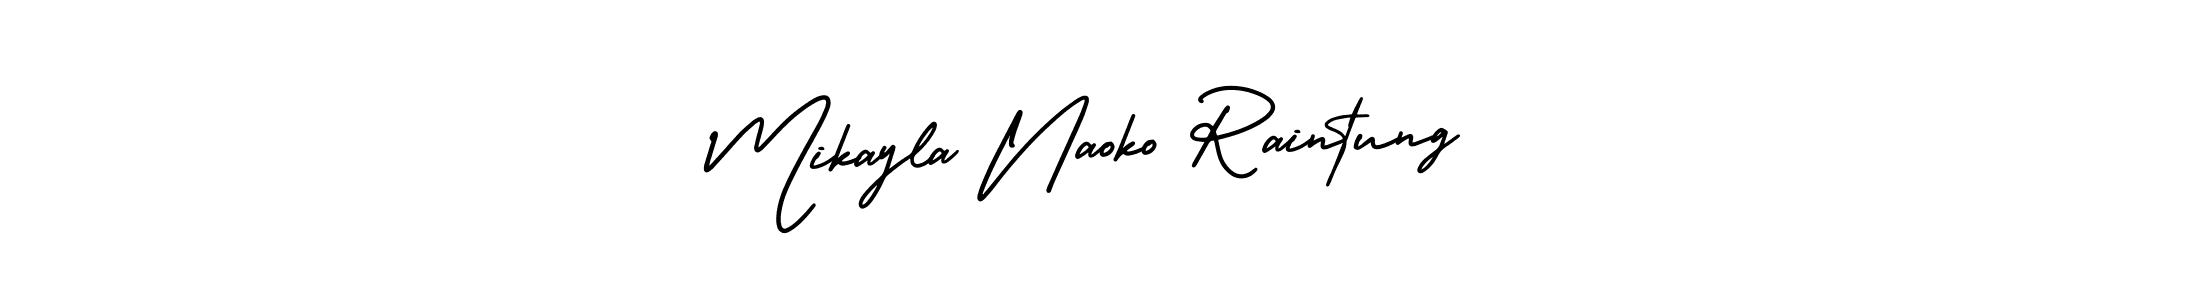 Best and Professional Signature Style for Mikayla Naoko Raintung. AmerikaSignatureDemo-Regular Best Signature Style Collection. Mikayla Naoko Raintung signature style 3 images and pictures png